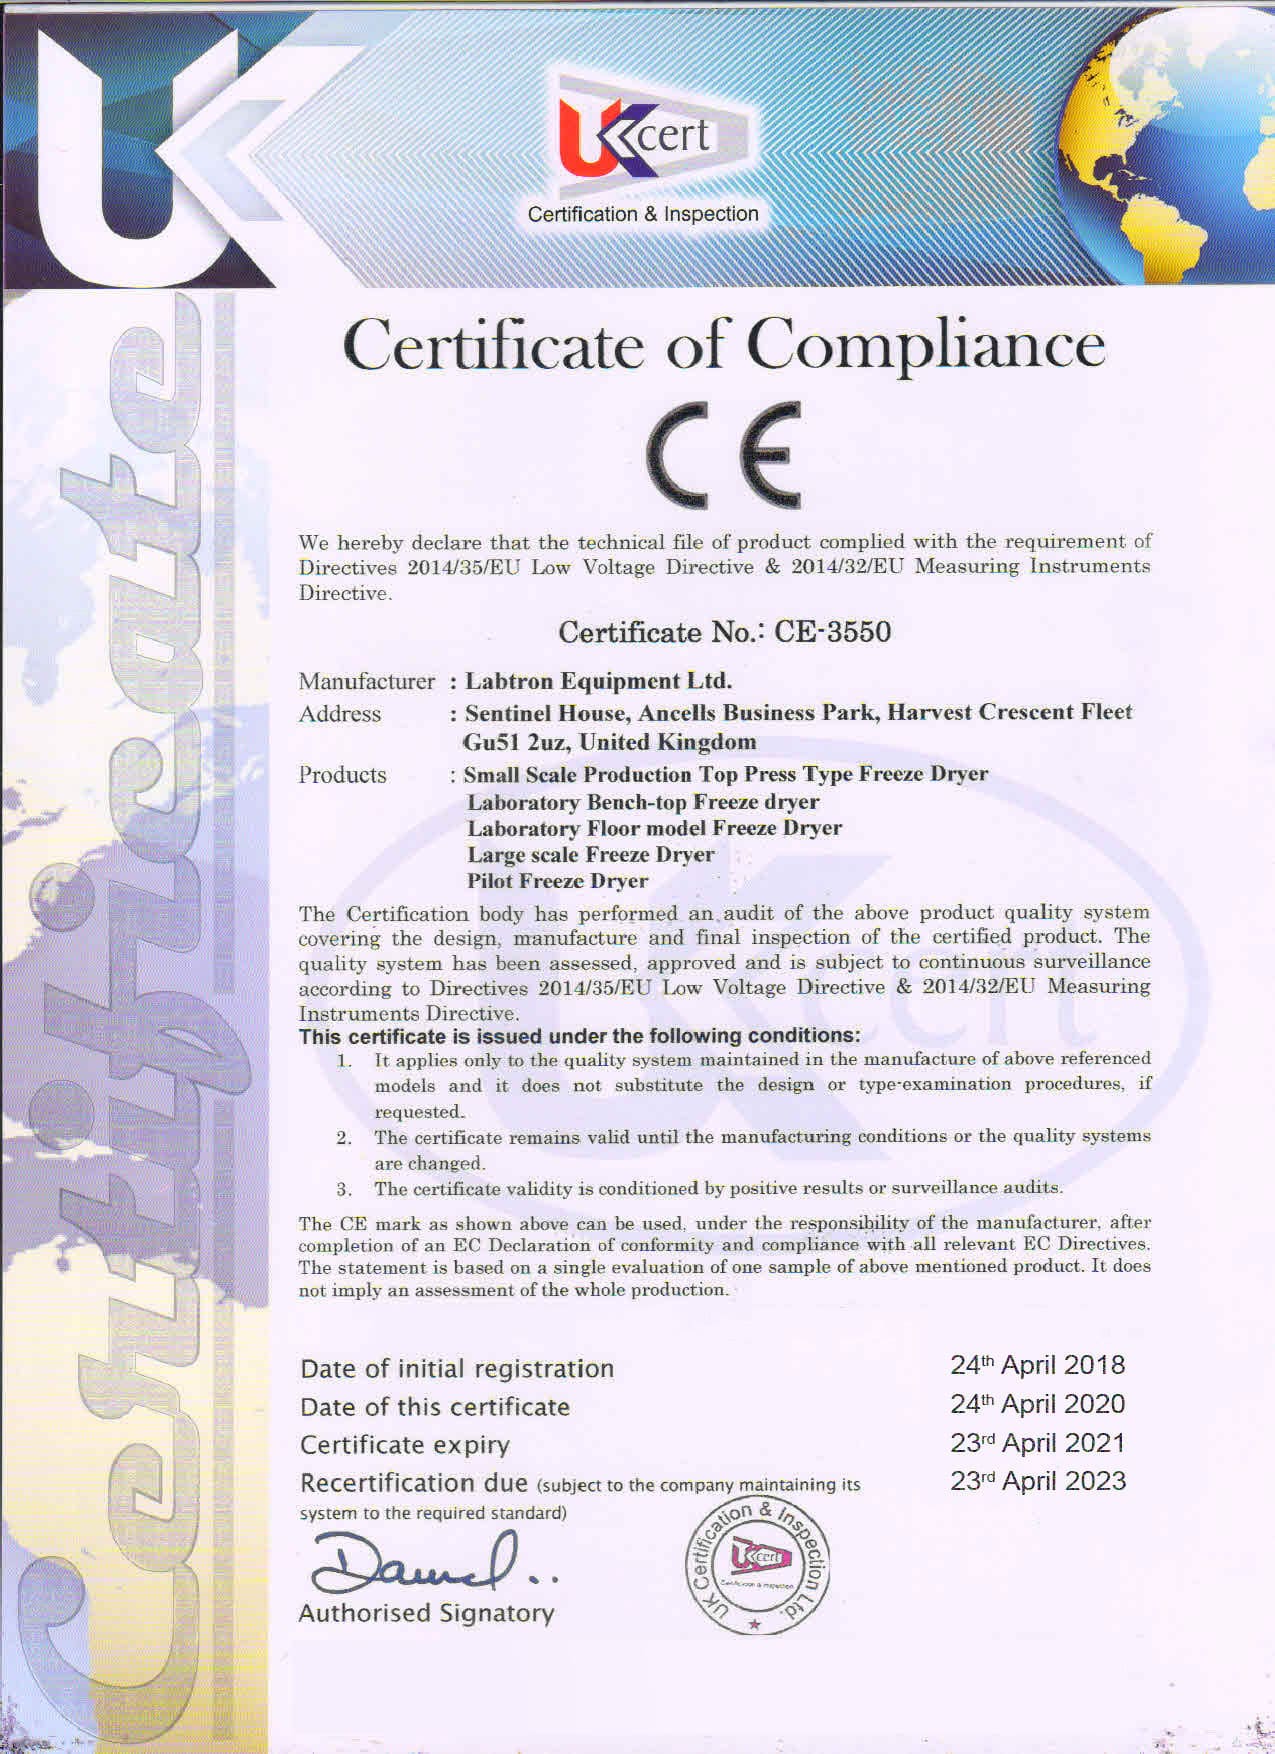 Labtron Equipment Ltd. Certificate of Compliance CE-3550 : Labtron Certification